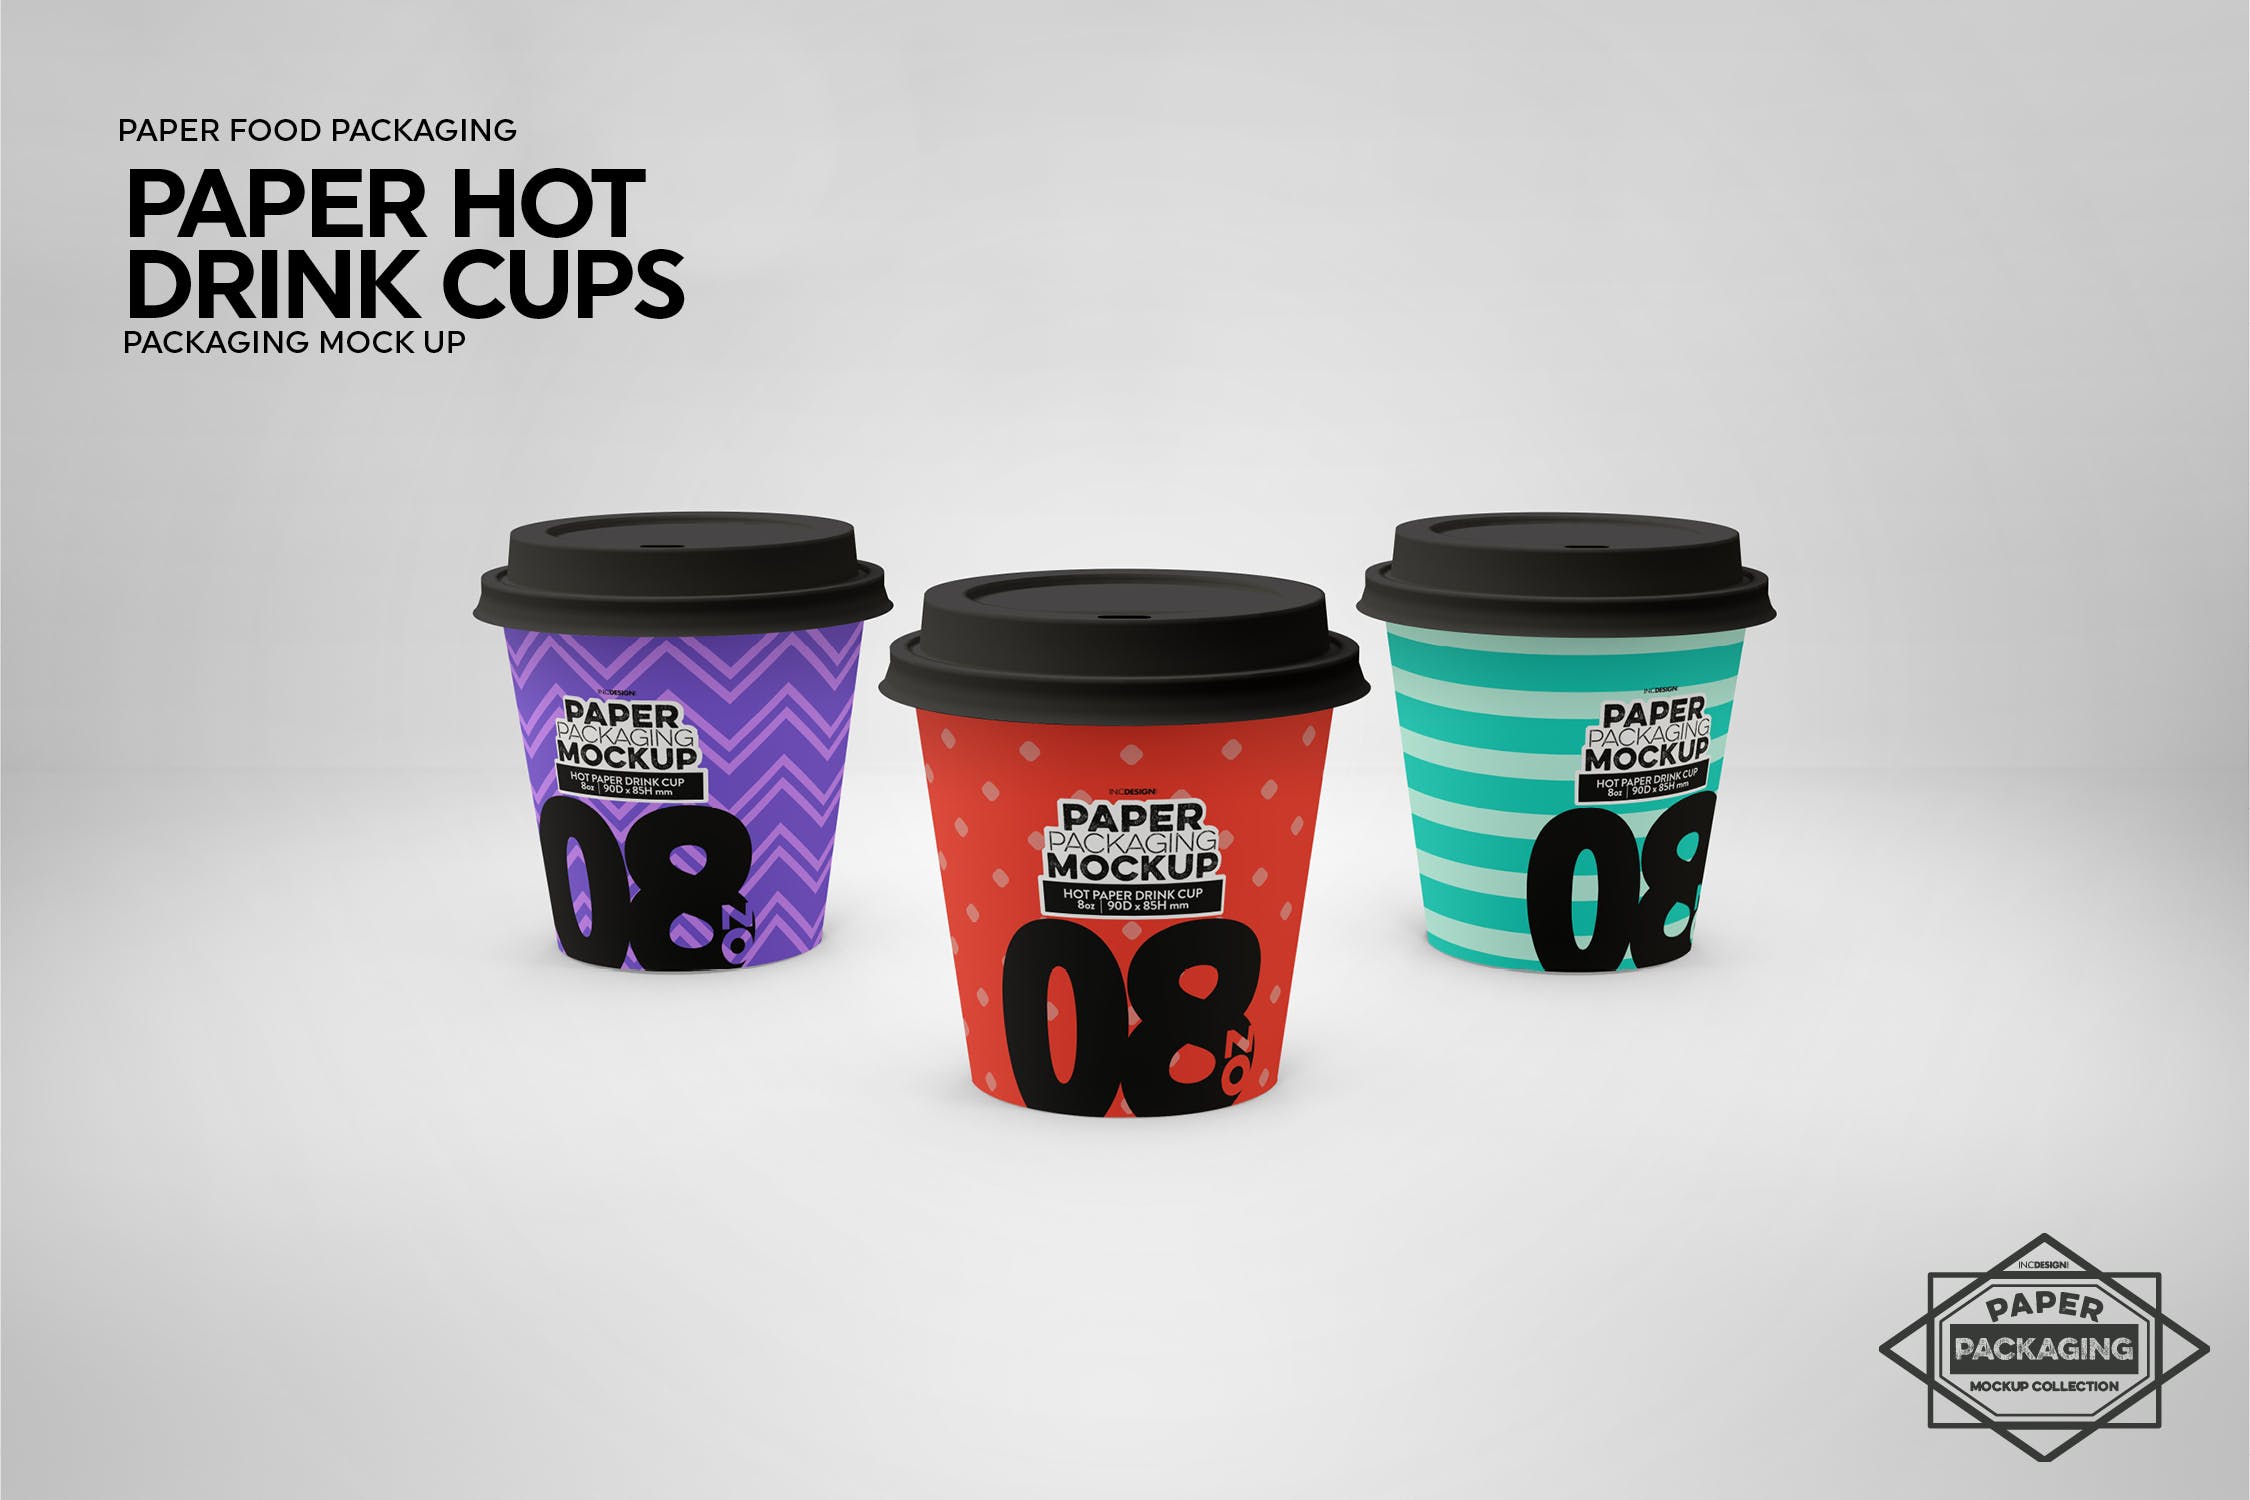 热饮一次性纸杯外观设计16图库精选 Paper Hot Drink Cups Packaging Mockup插图(14)